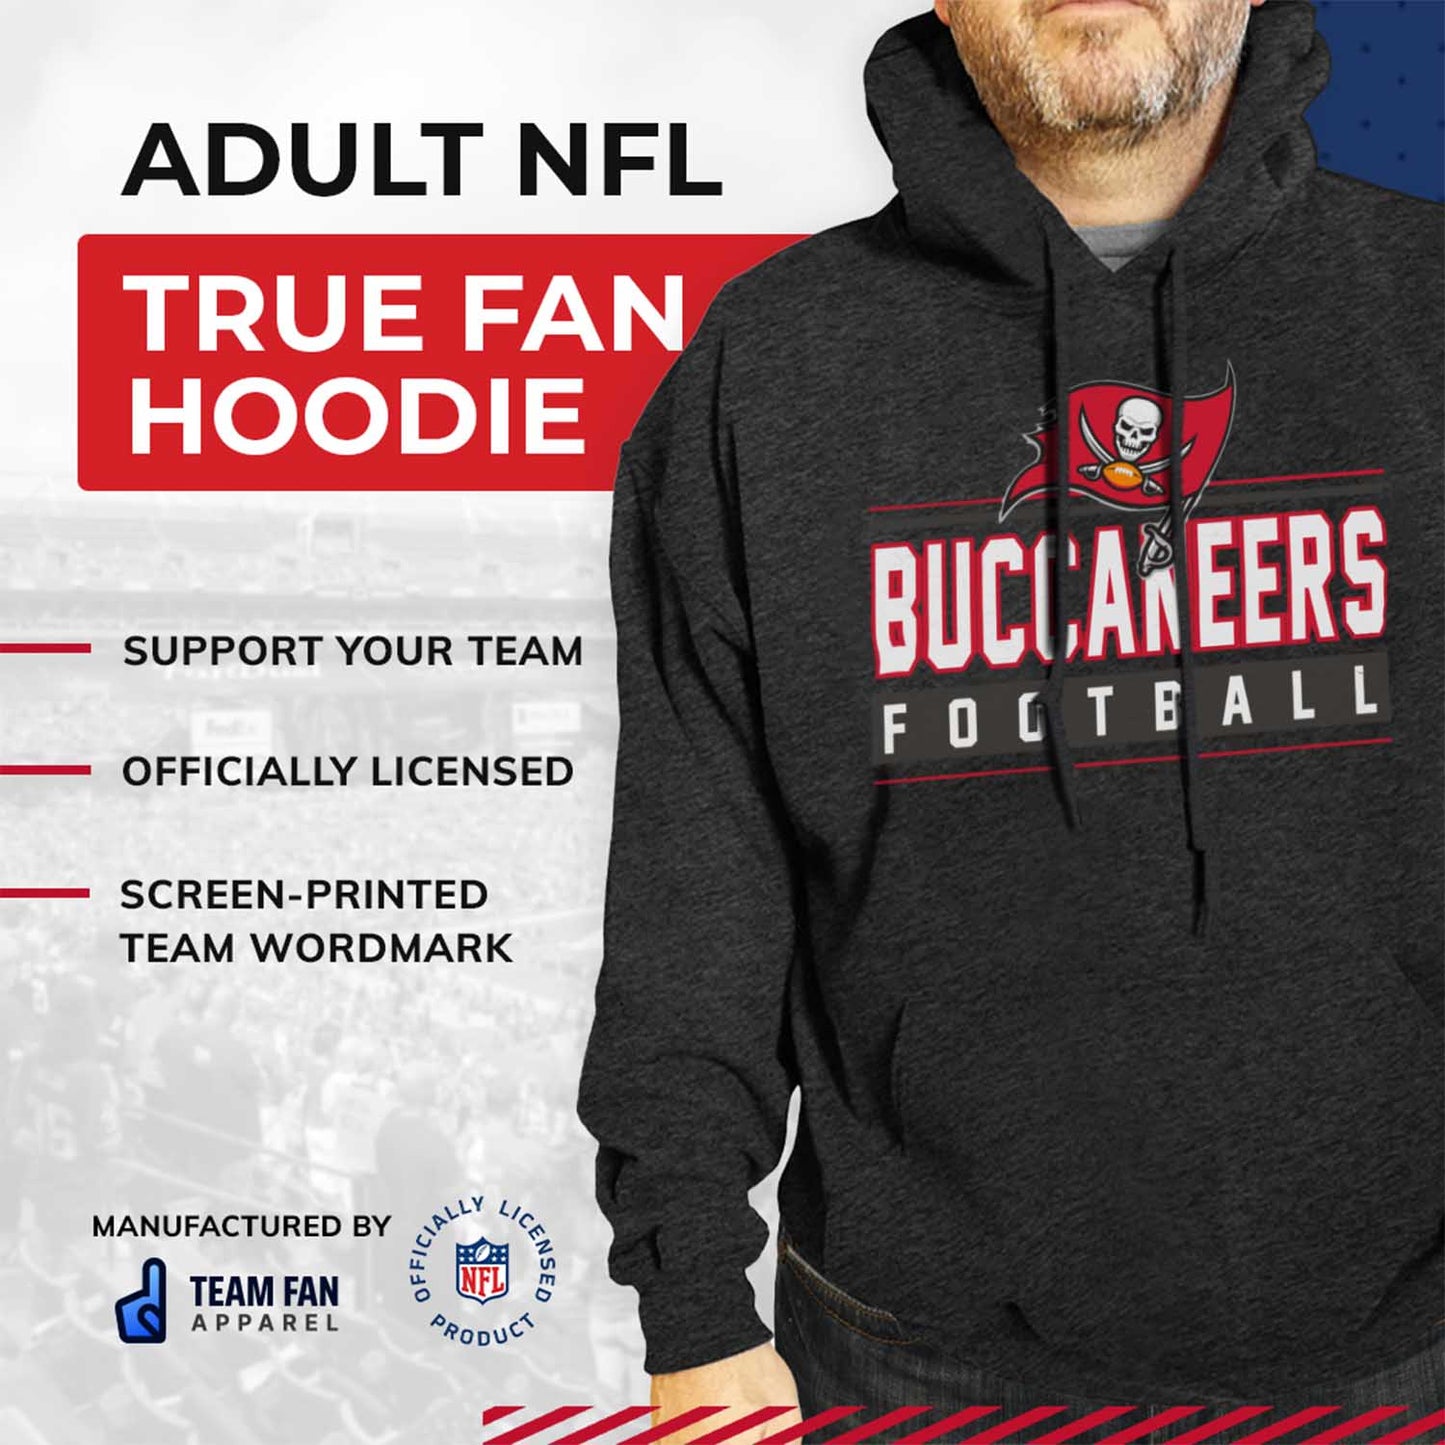 Tampa Bay Buccaneers NFL Adult True Fan Hooded Charcoal Sweatshirt - Charcoal